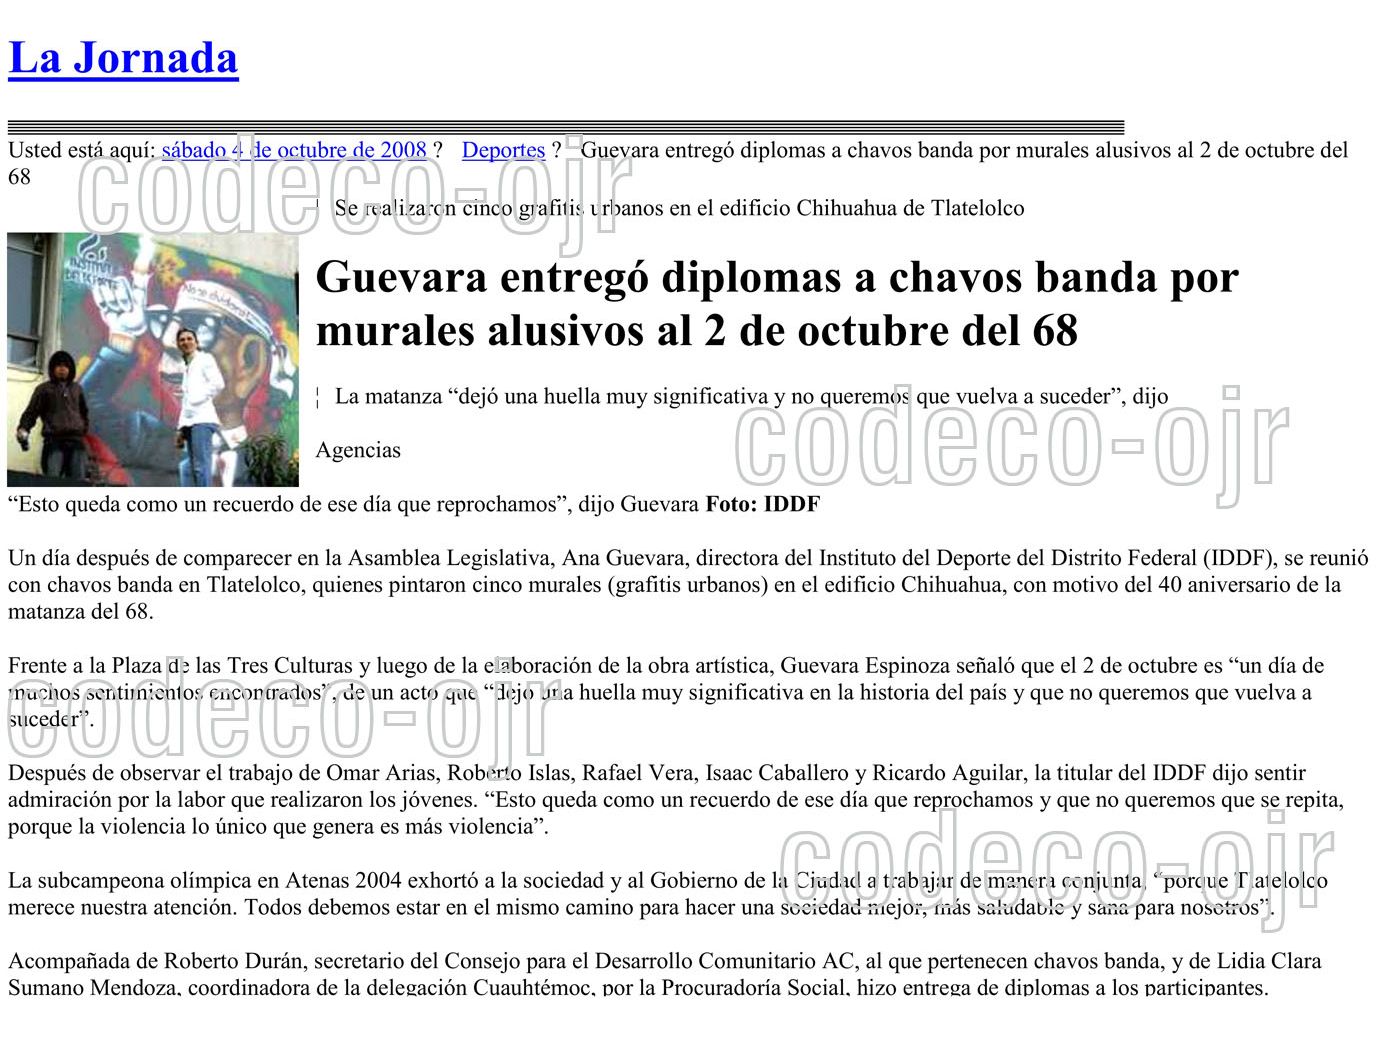 Archivo: ANA GUEVARA Y CODECO-OJR 2008.jpg